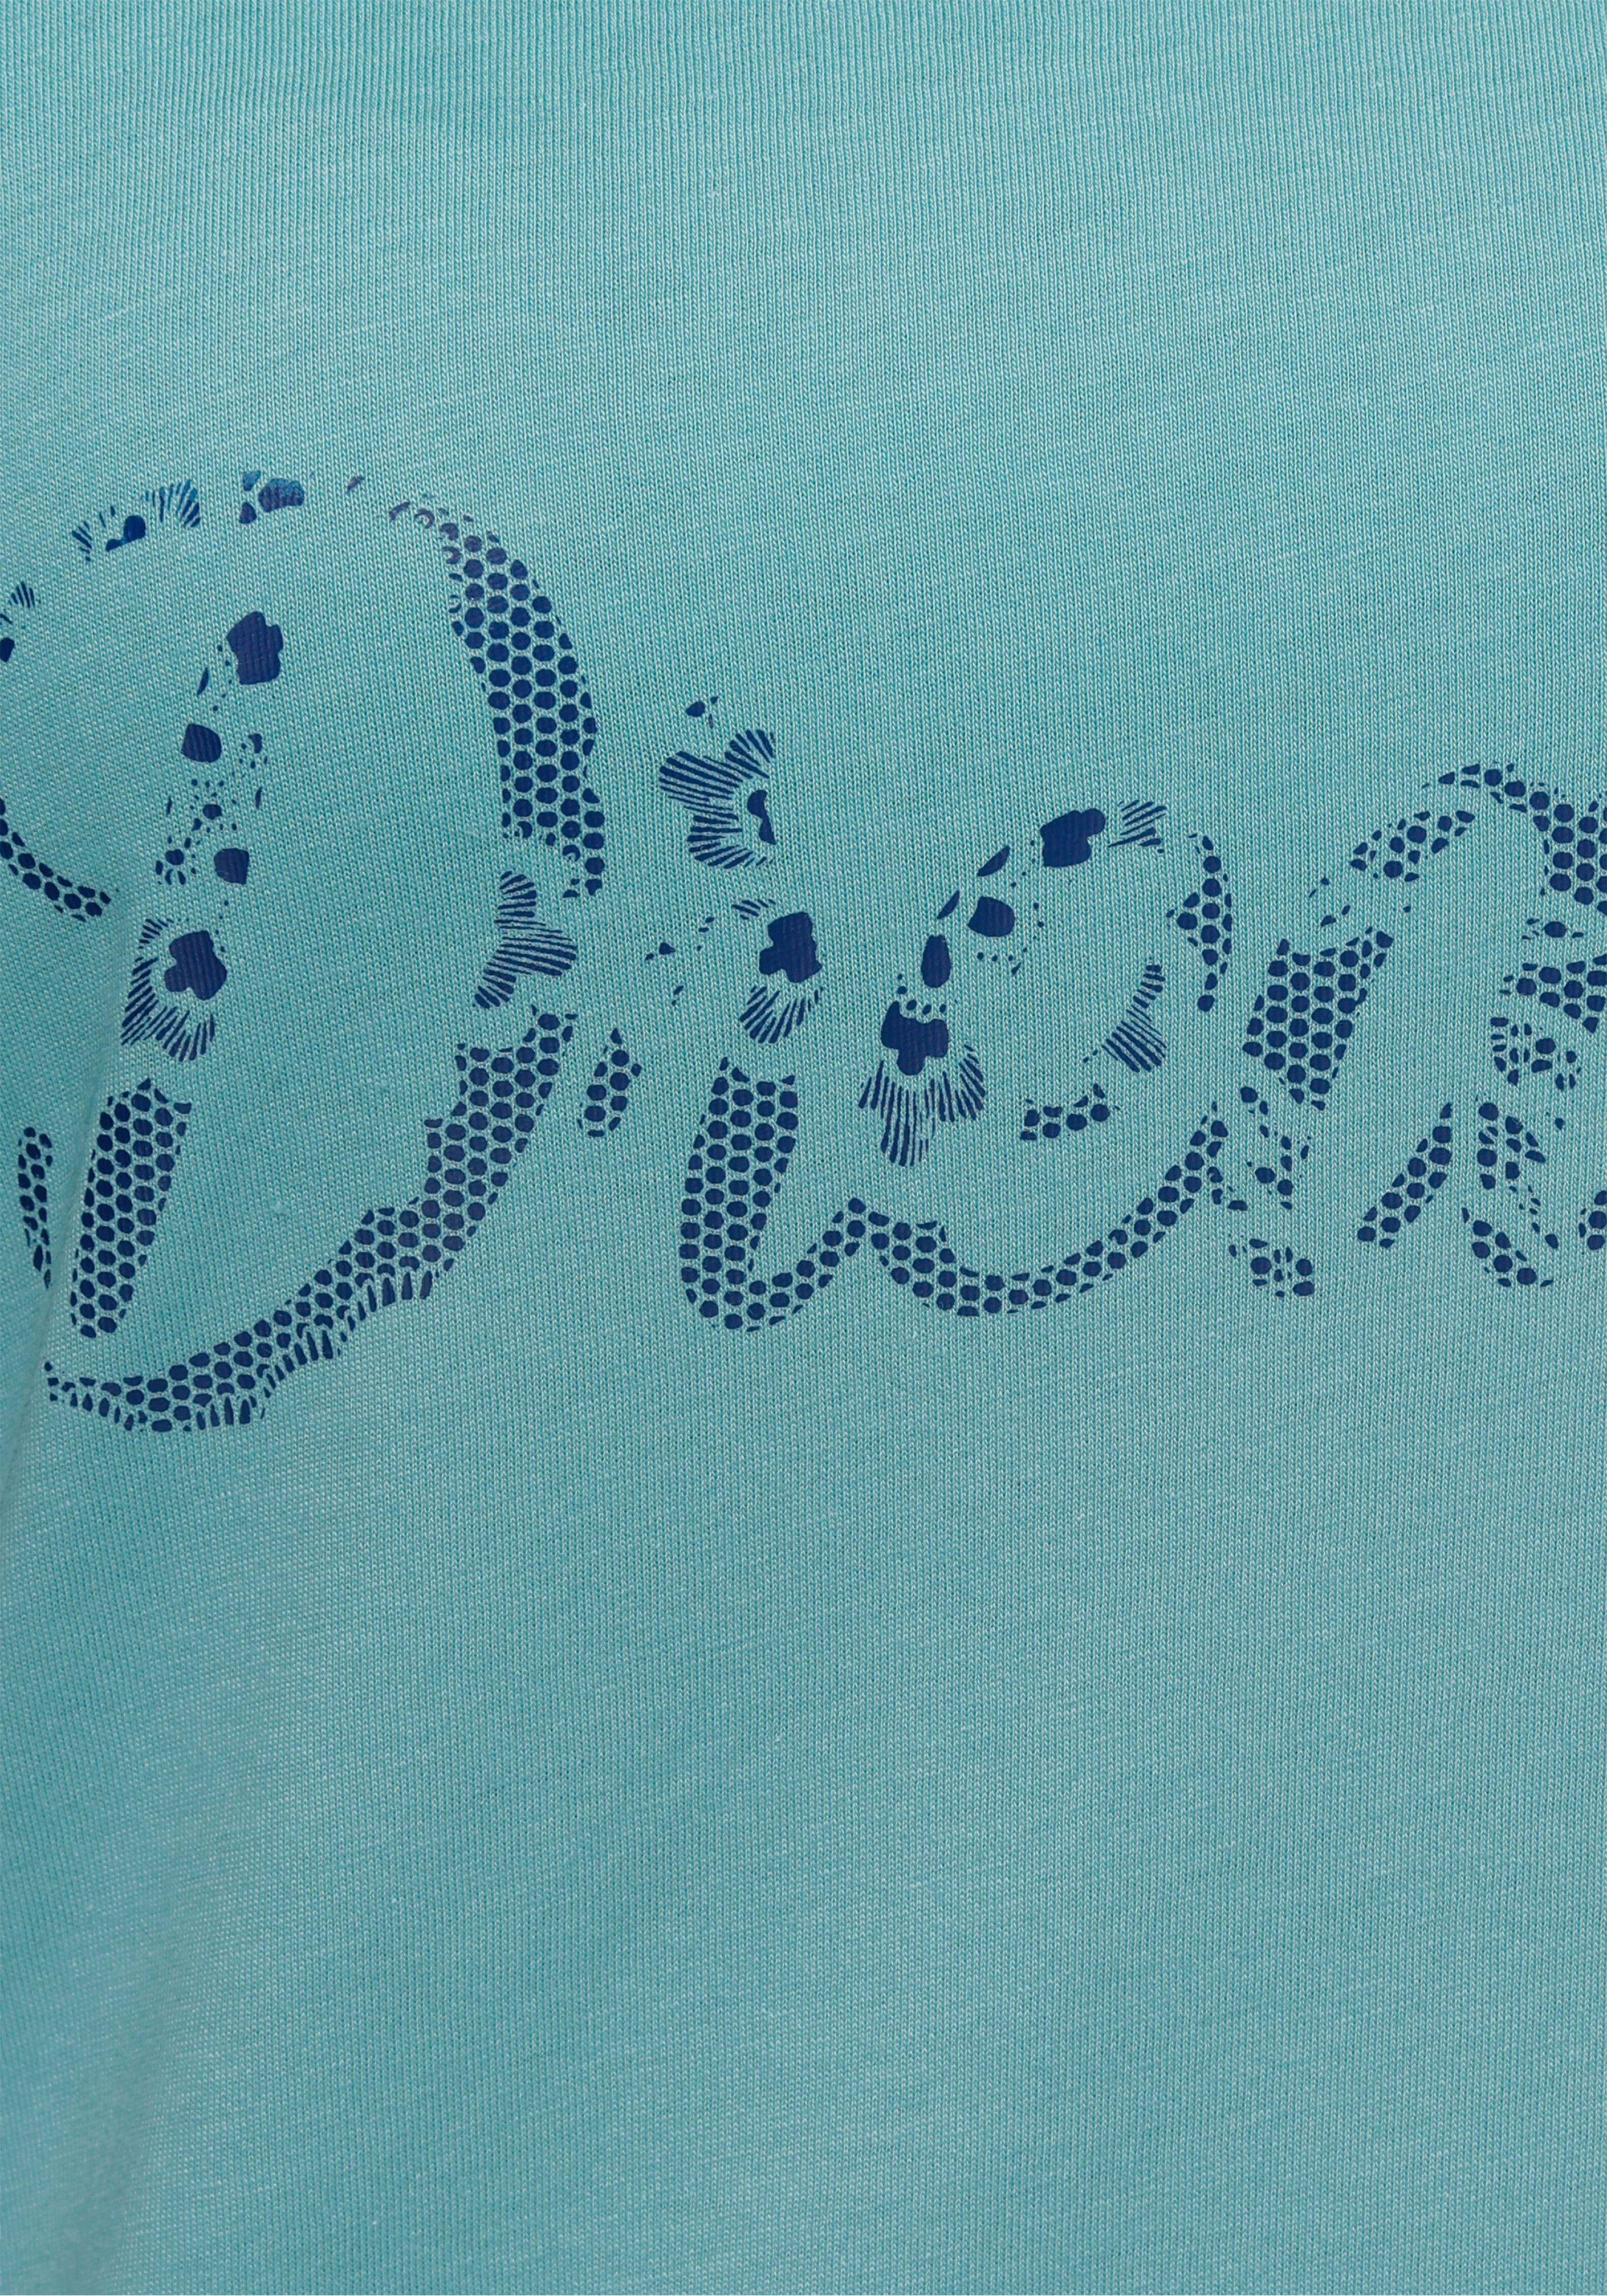 Vivance in mit Print Dreams Spitzenoptik blau, Sleepshirt (2er-Pack) dunkelblau